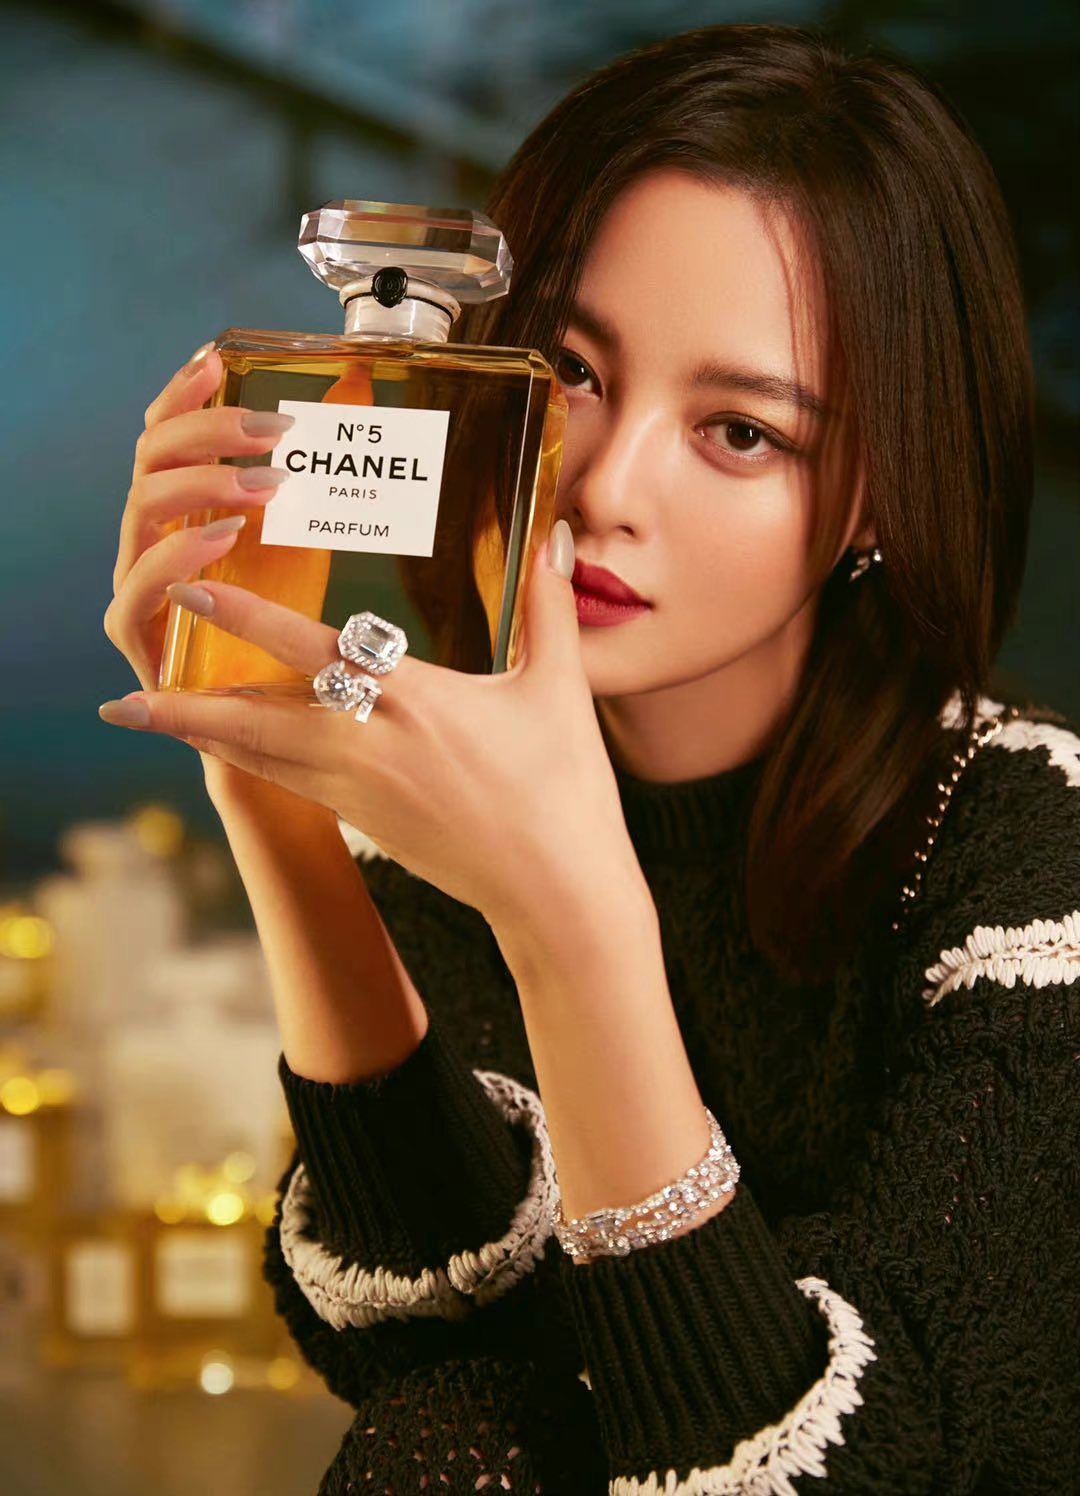 dramapotatoe backup on X: #XinZhilei for Chanel “Feeling Chanel